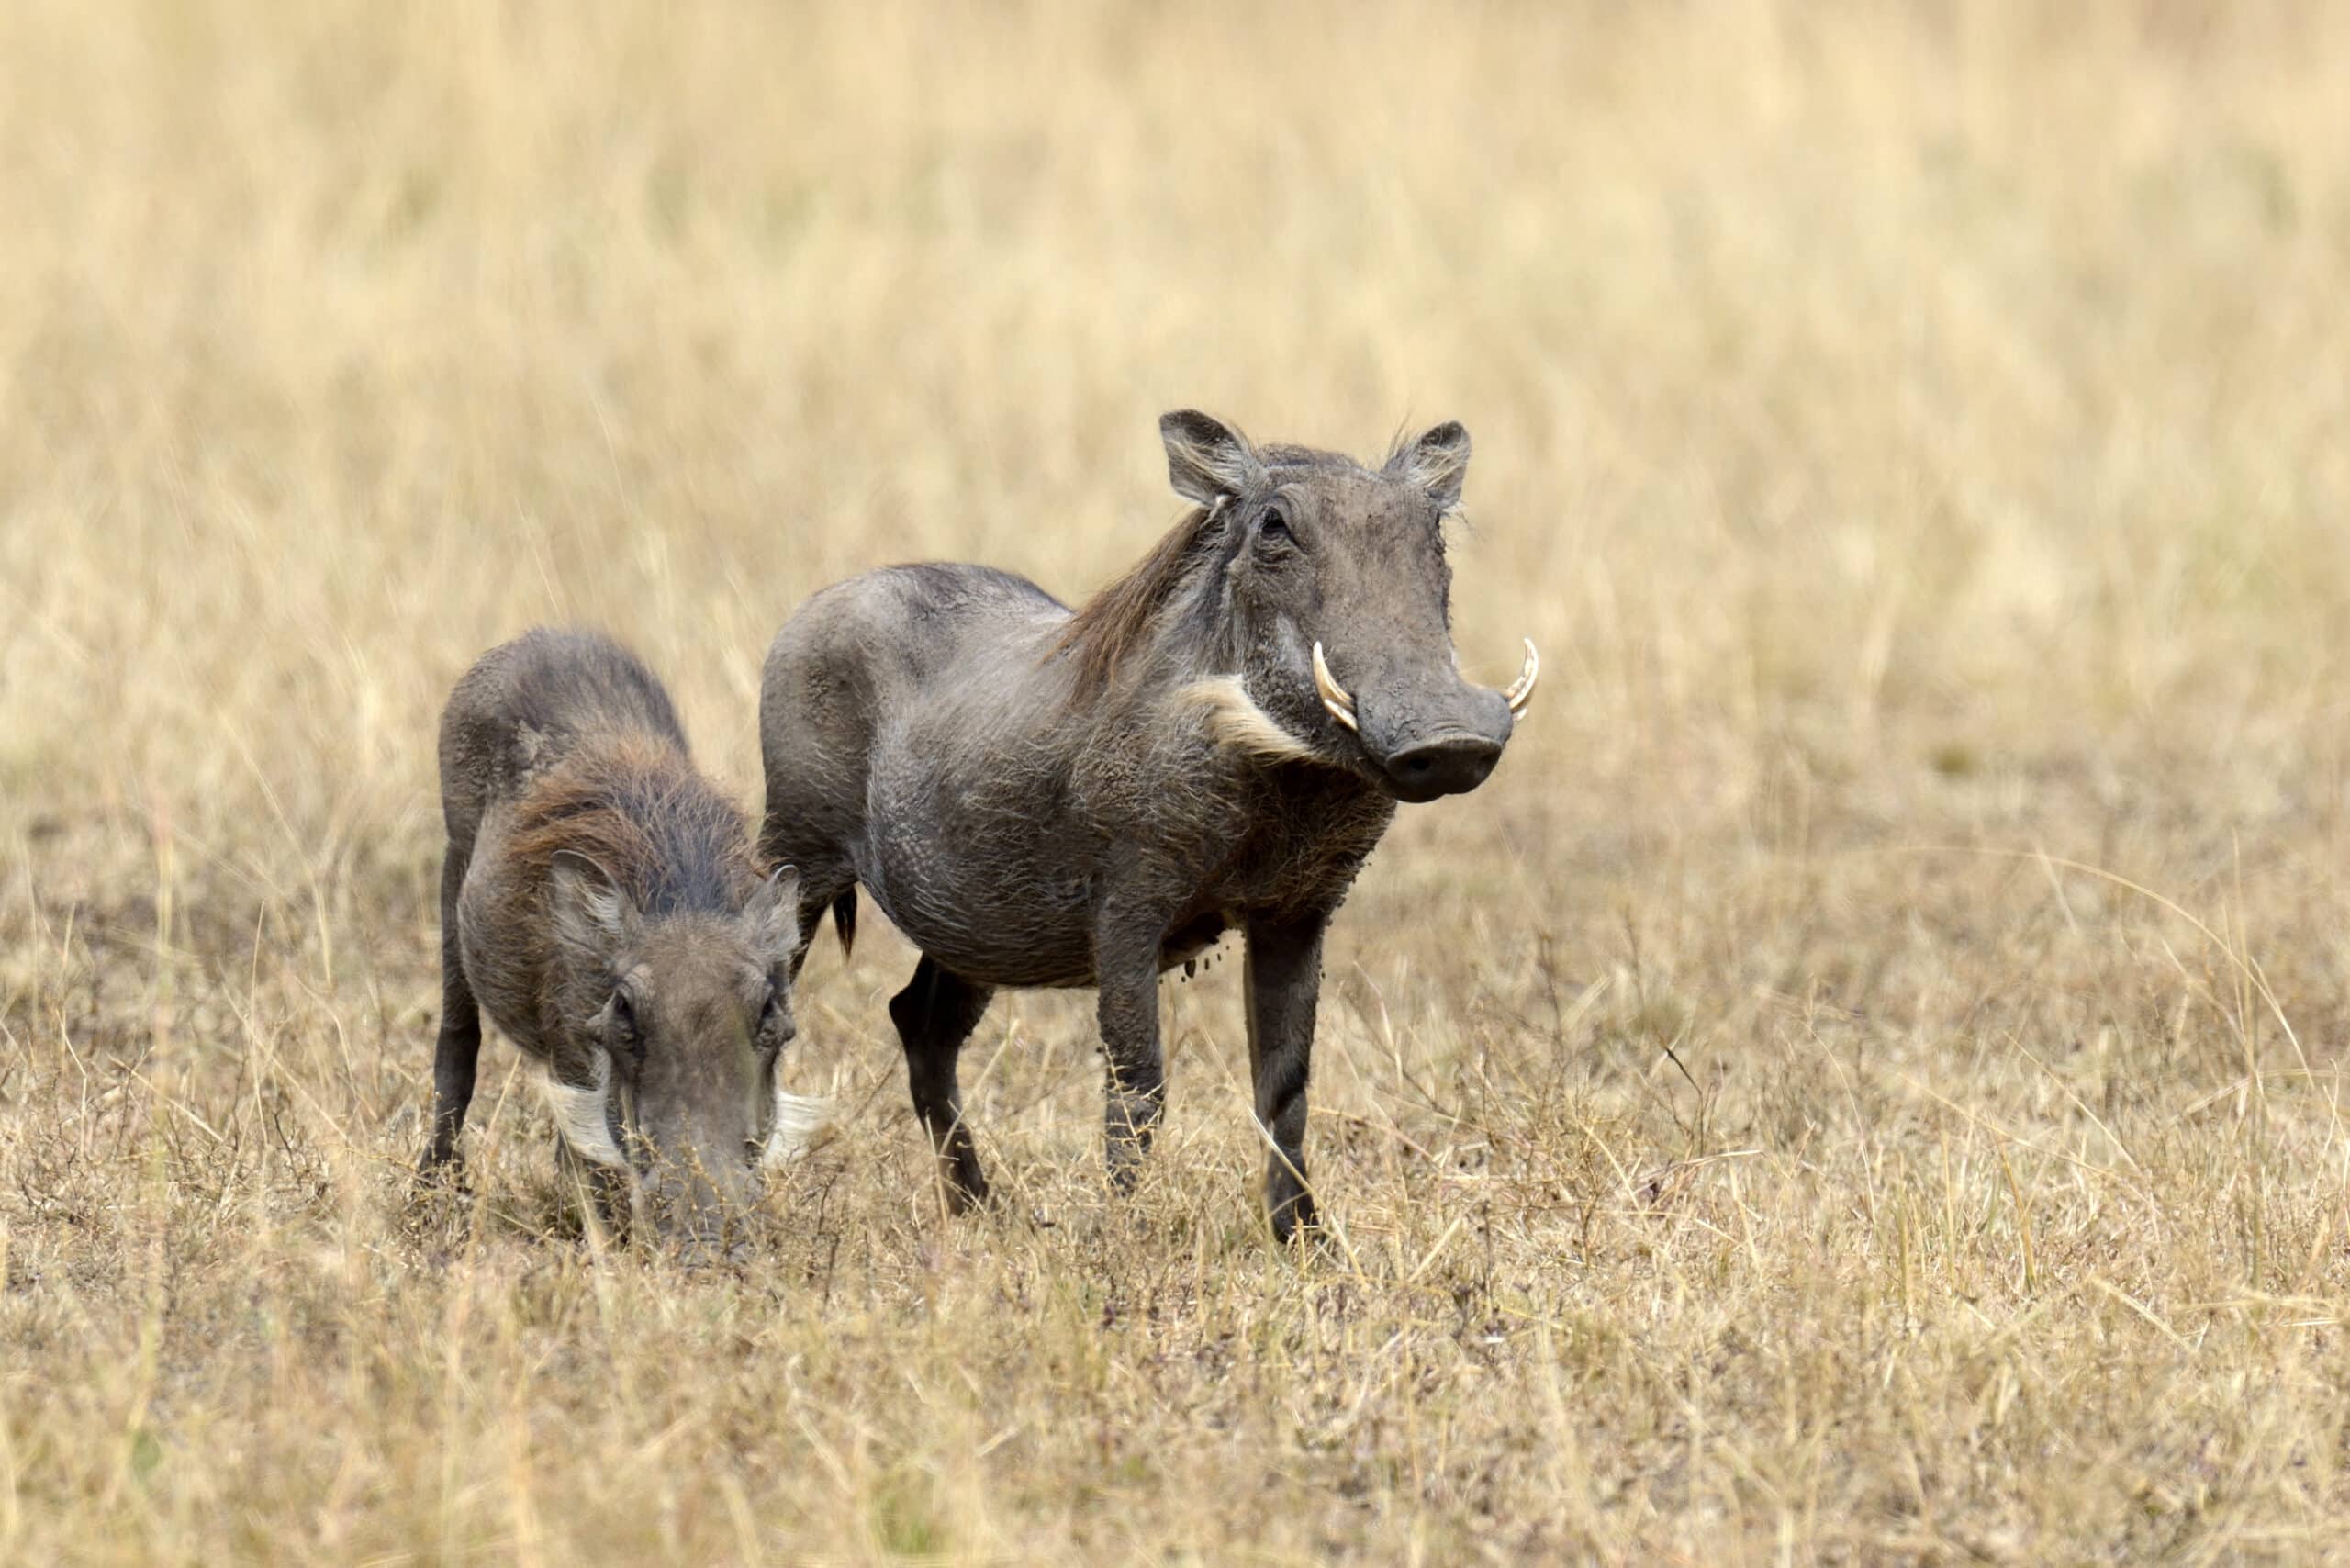 warthog on the national park kenya 2021 08 26 15 55 38 utc scaled